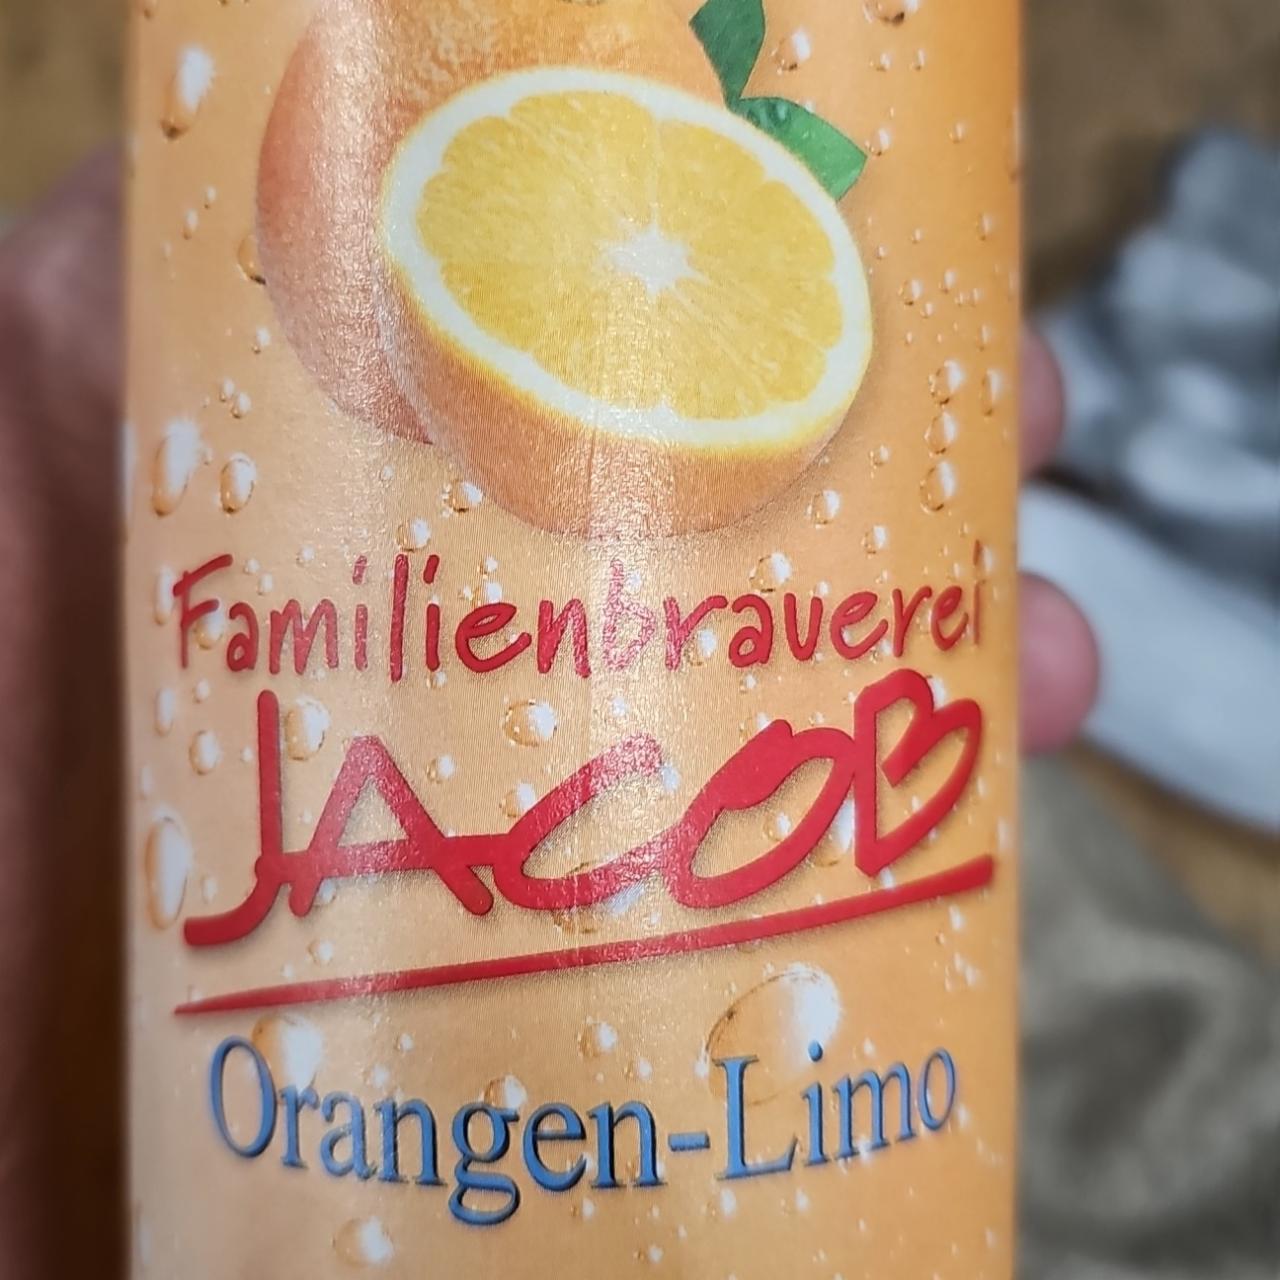 Fotografie - Orangen-limo Familienbrauerei Jacob